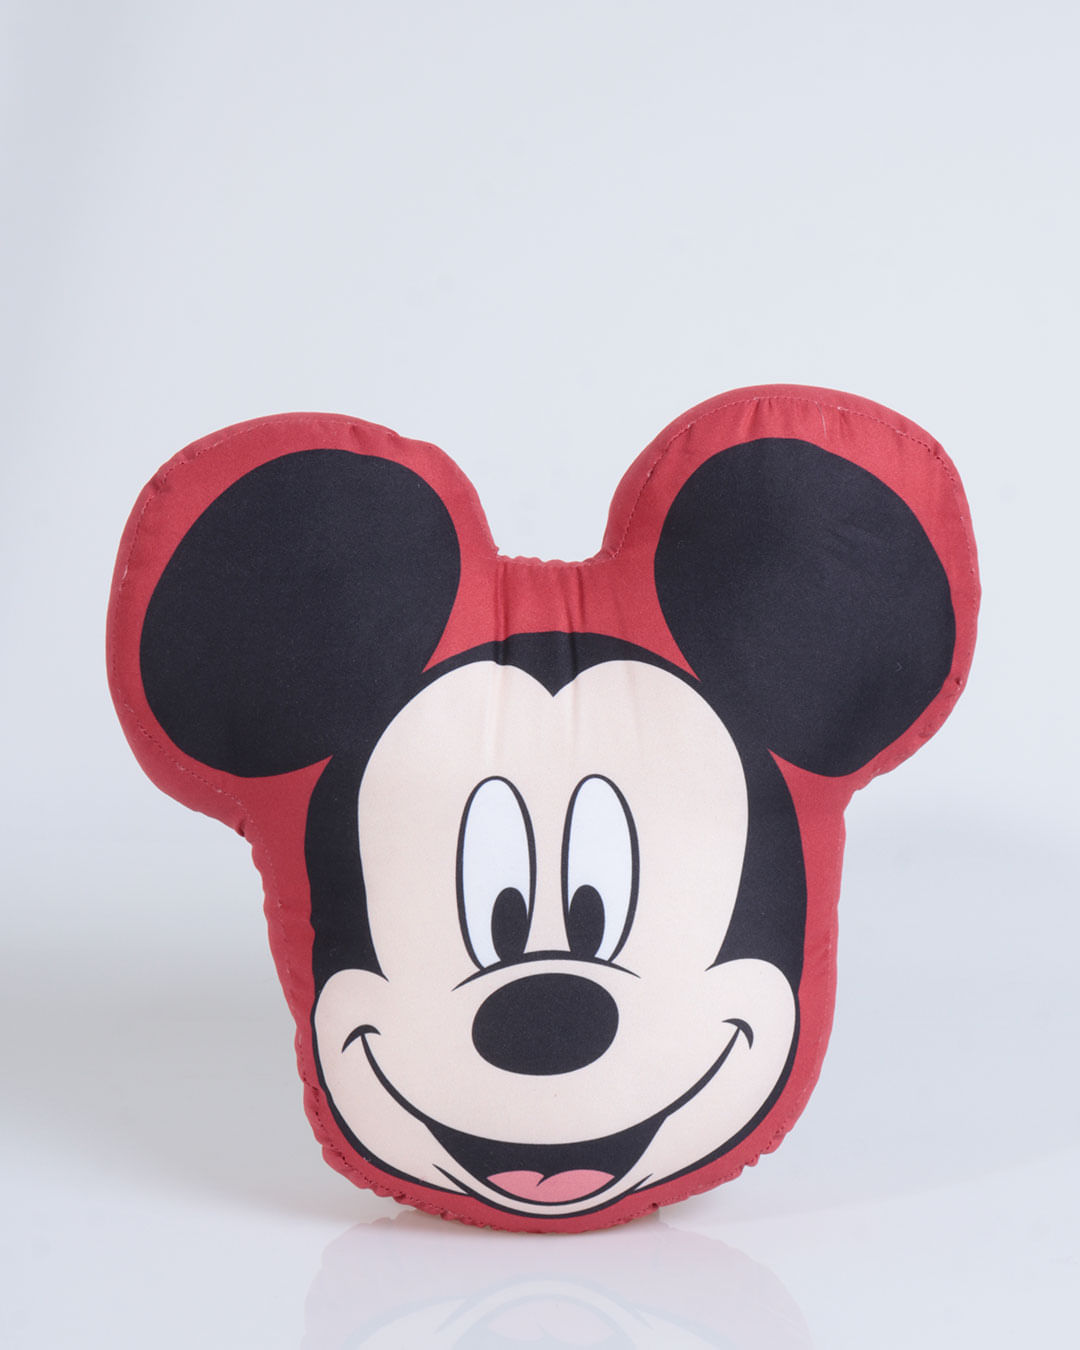 Almofada-Formato-e-Estampa-Mickey-34x31-Disney-Vermelha